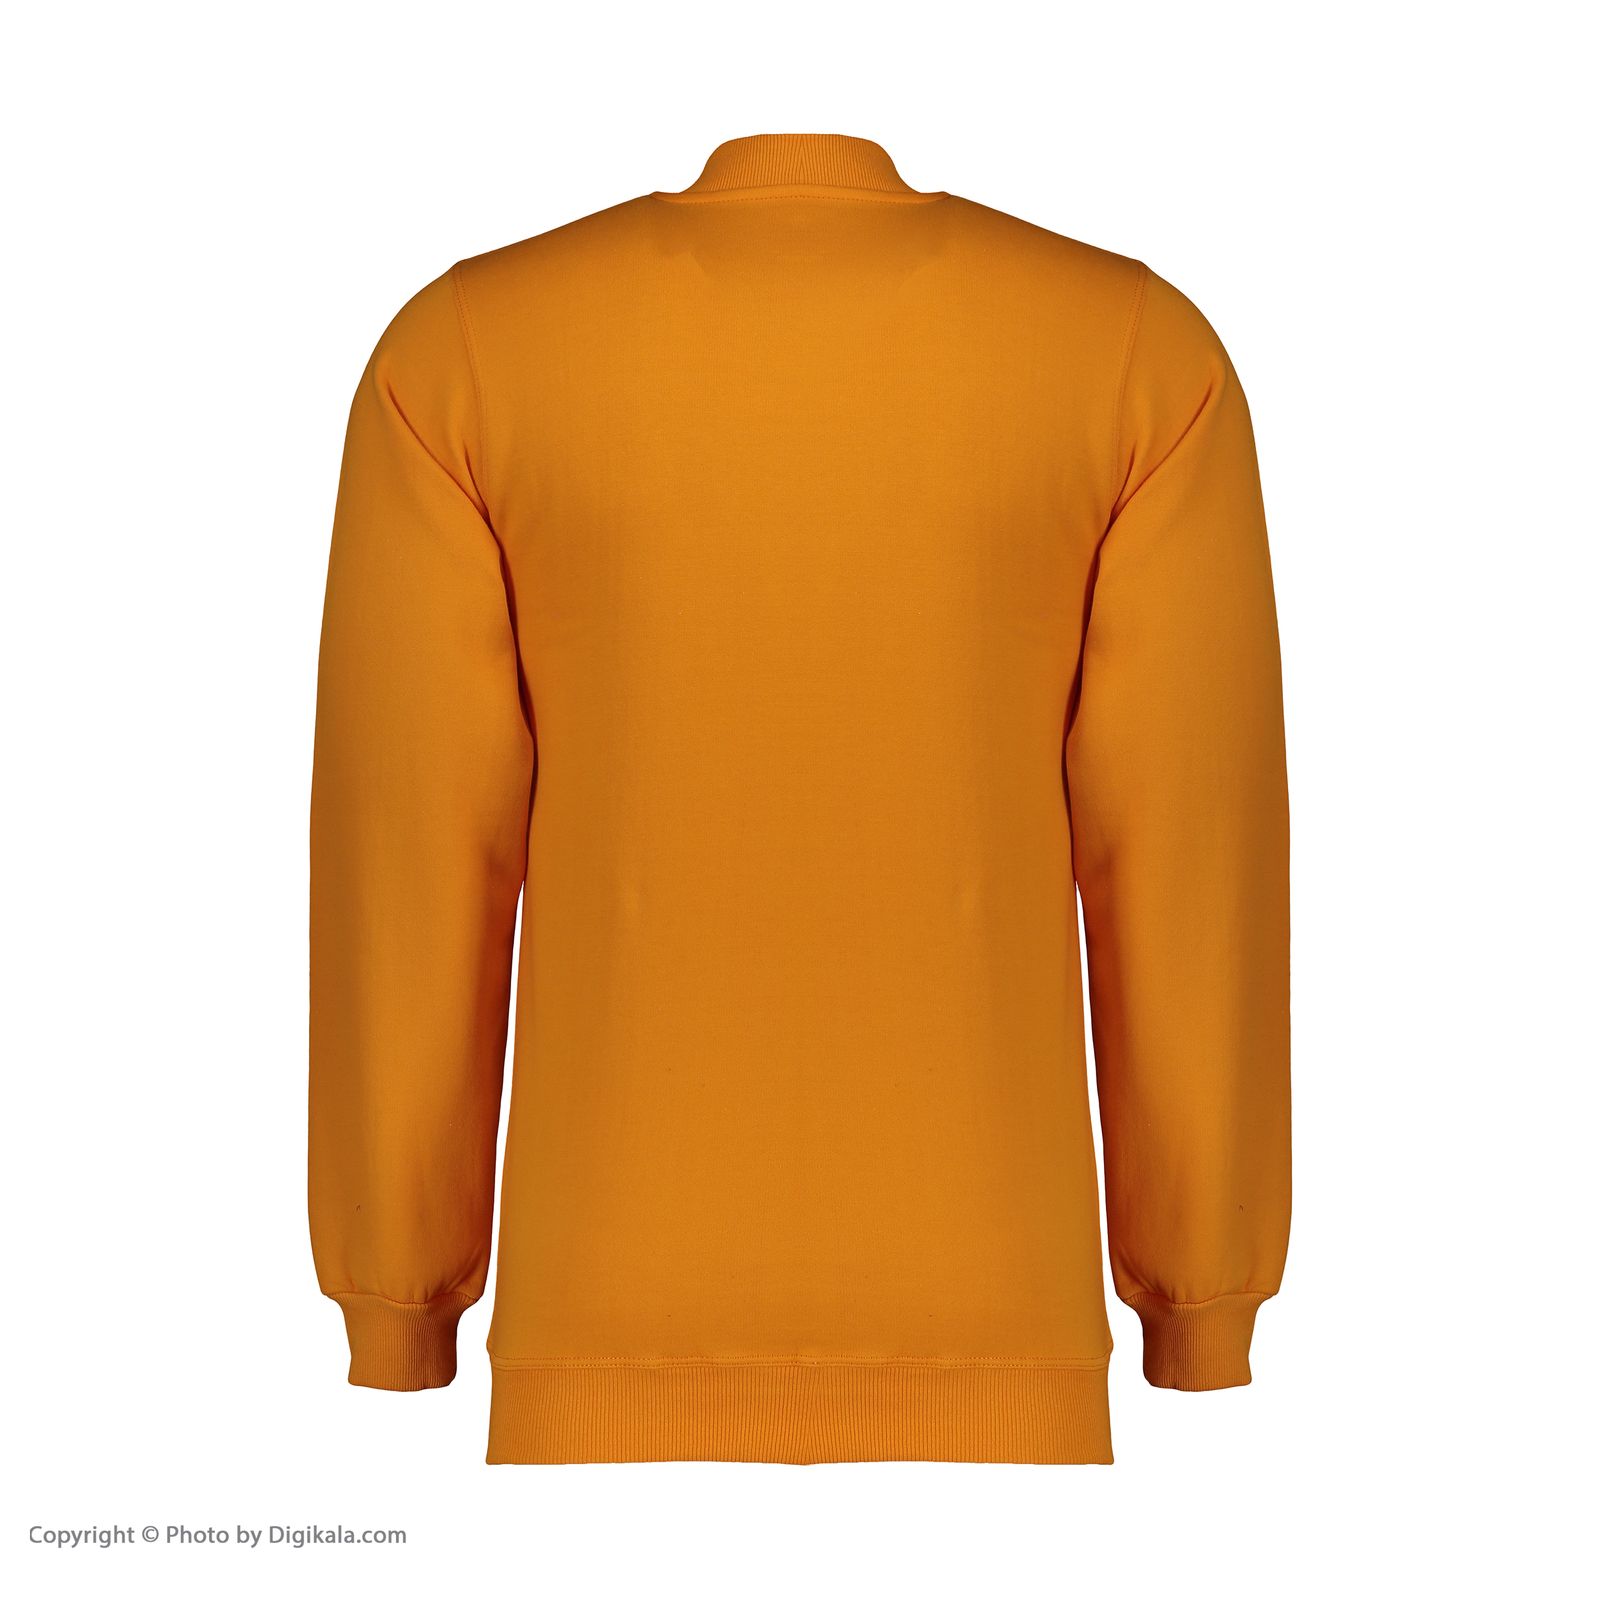 سویشرت مردانه رایکا مدل 2255 رنگ پرتقالی -  - 2